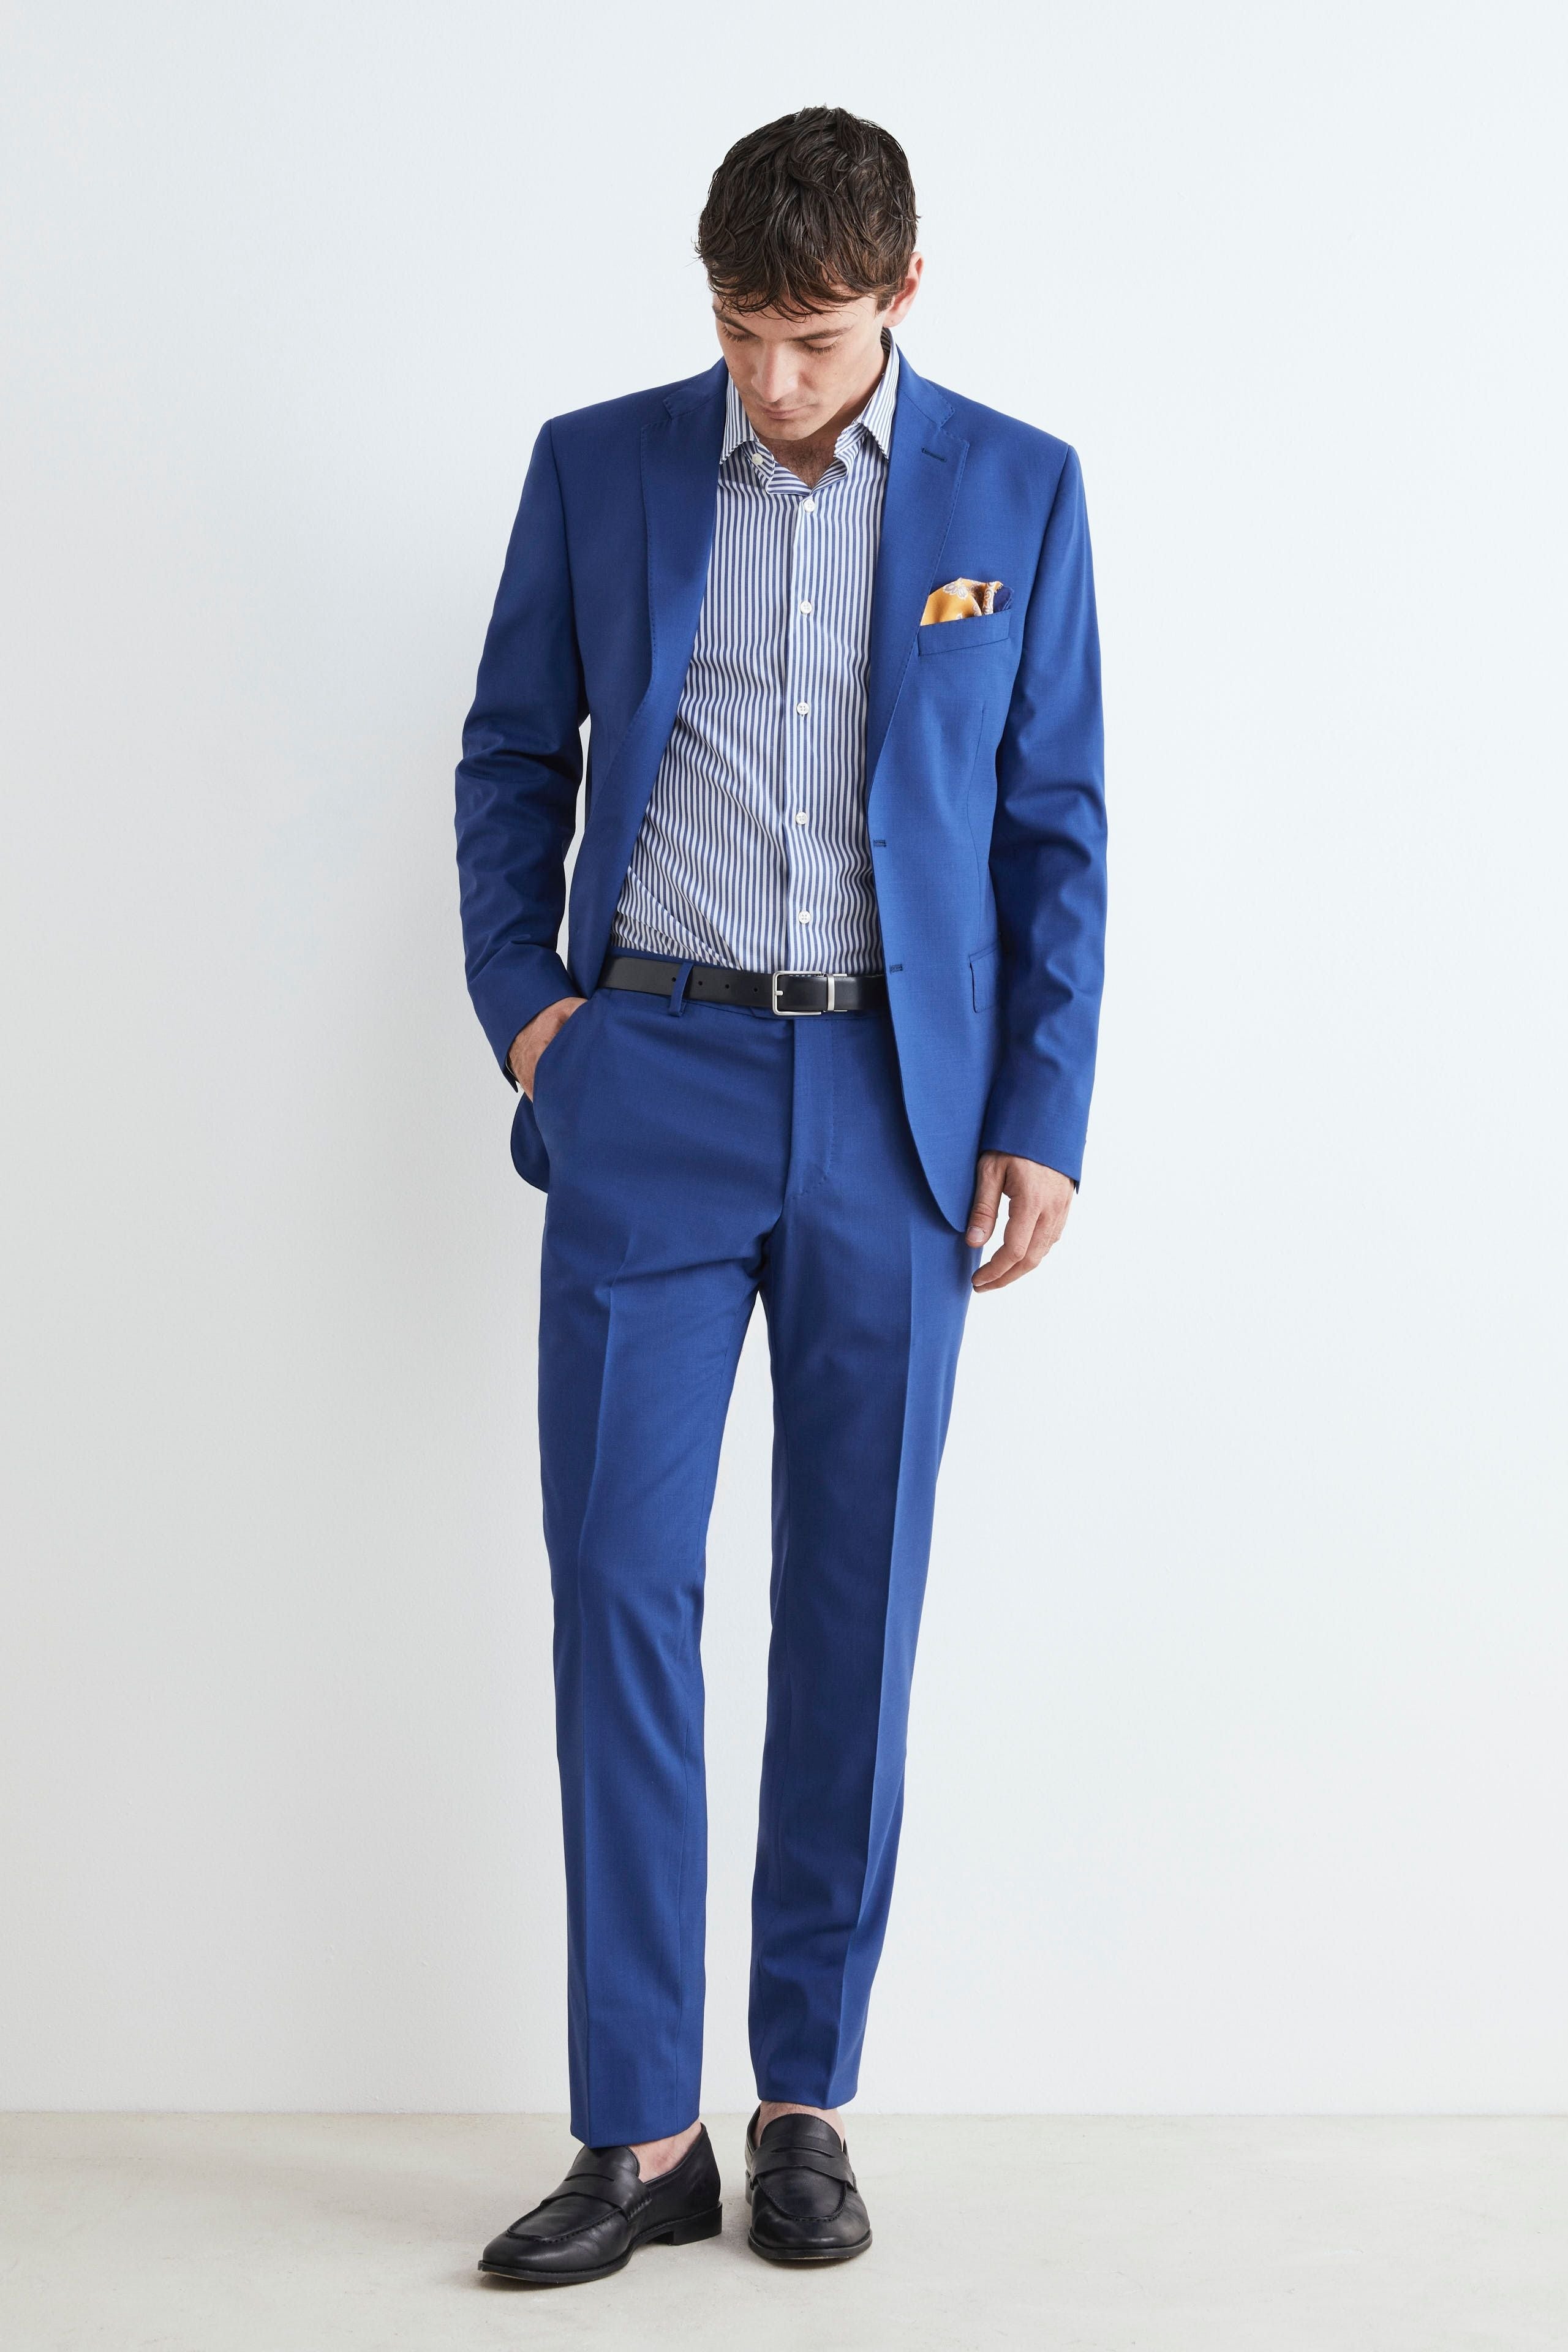 Blue formal Suit - Royal blue